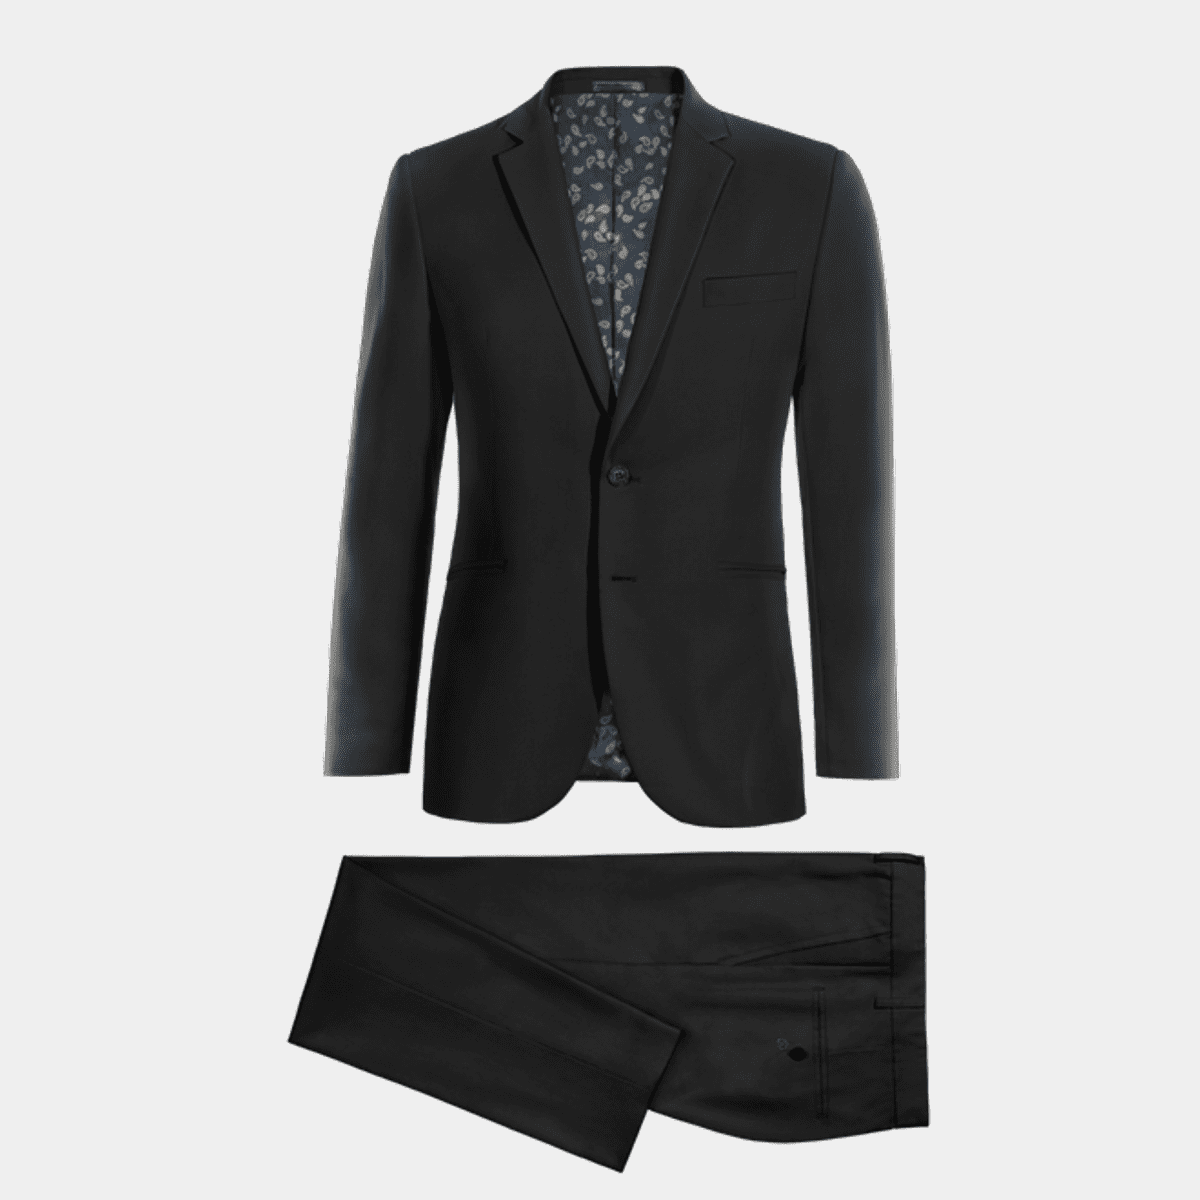 Black Suits for Men Online - Hockerty